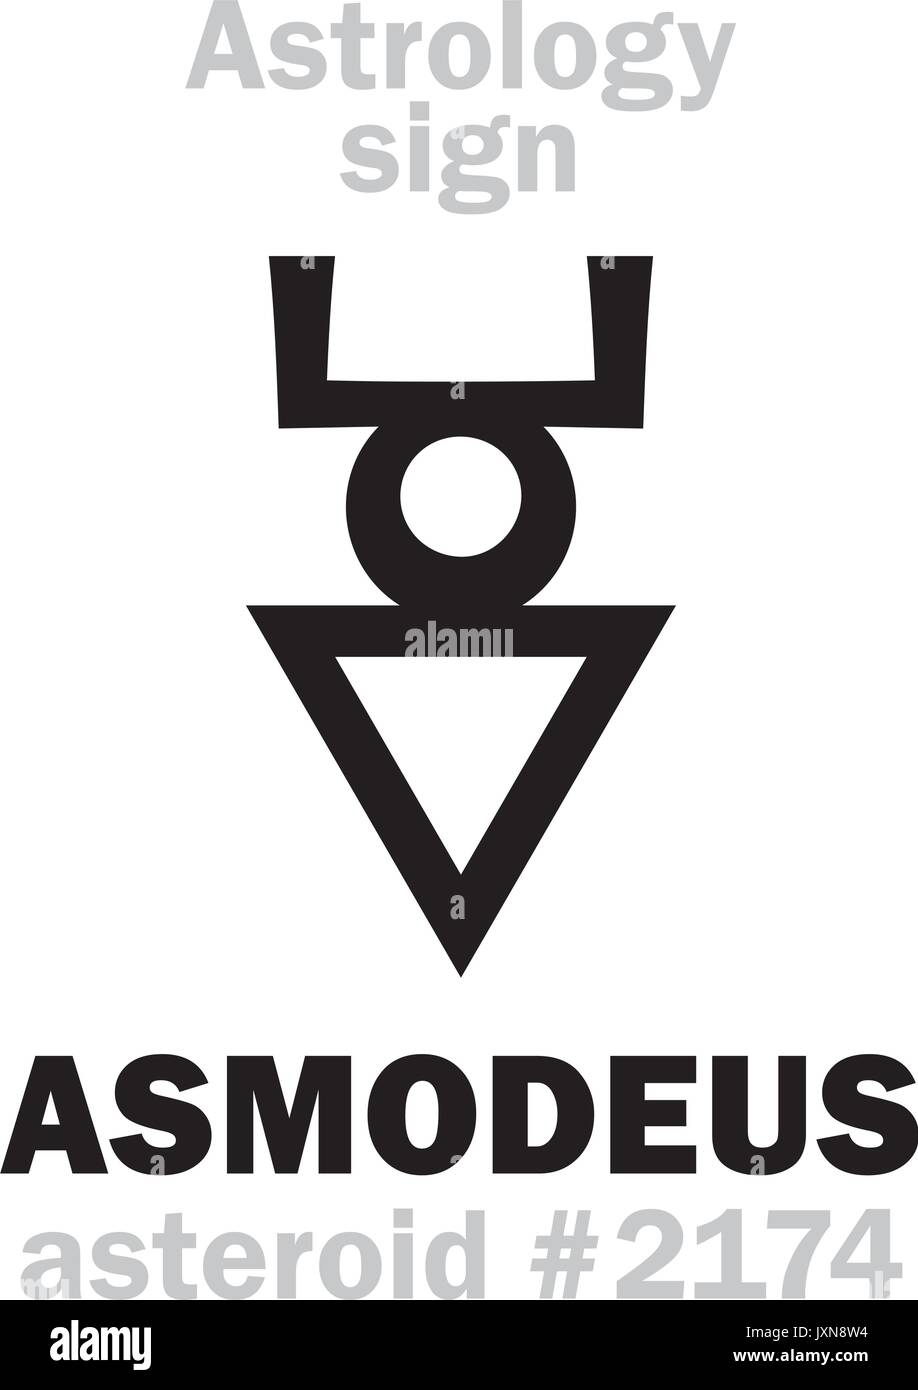 Astrology Alphabet: ASMODEUS (Hashmedai), asteroid #2174. Hieroglyphics character sign (single symbol). Stock Vector